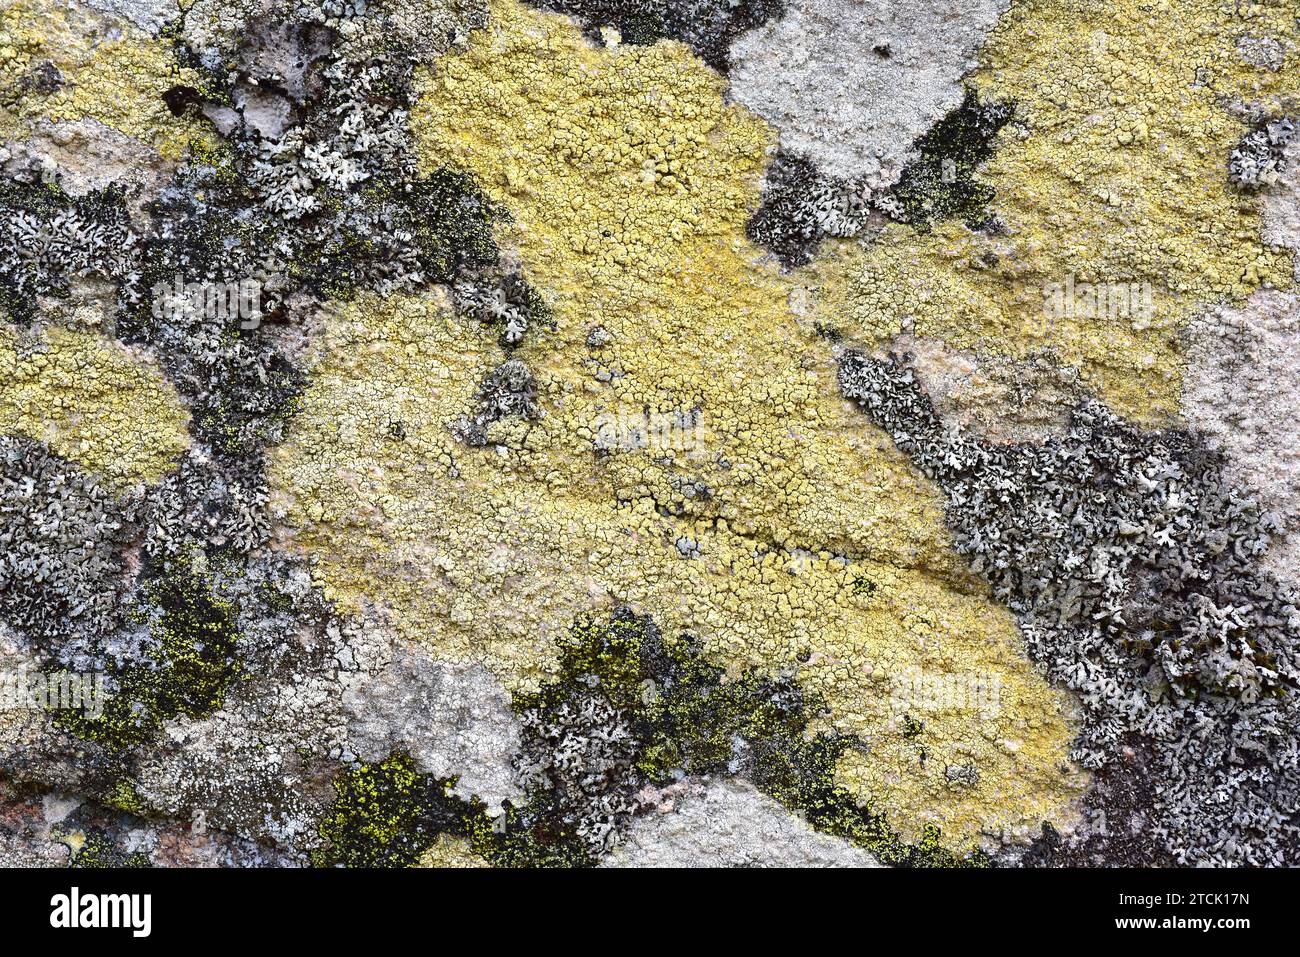 Yellow crustose lichen (Candelariella vitellina) on a granitic rock surrounded by foliose lichen Physcia sp. This photo was taken in Arribes del Duero Stock Photo